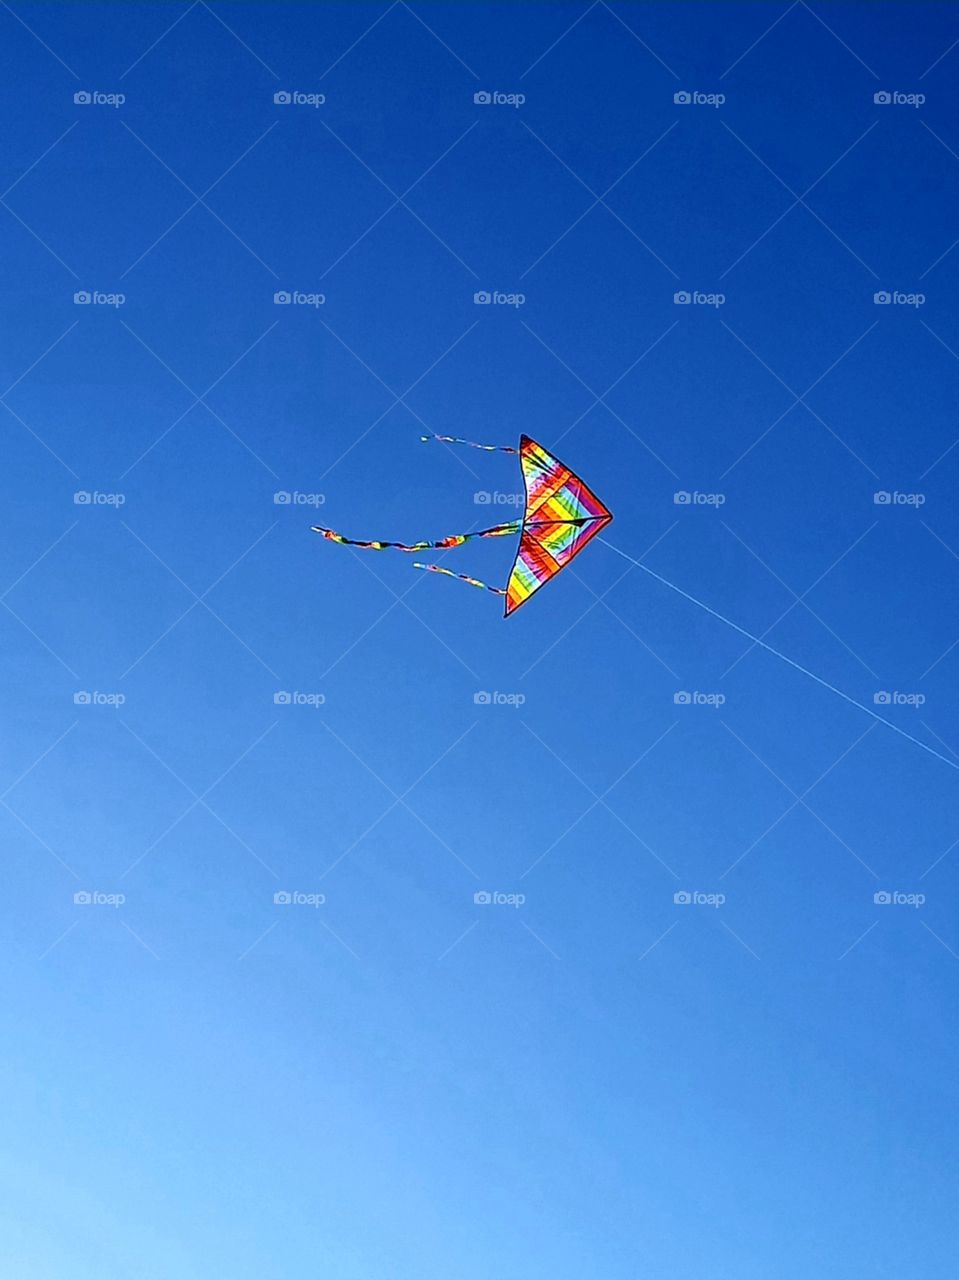 rainbow kite in high blue sky in summer